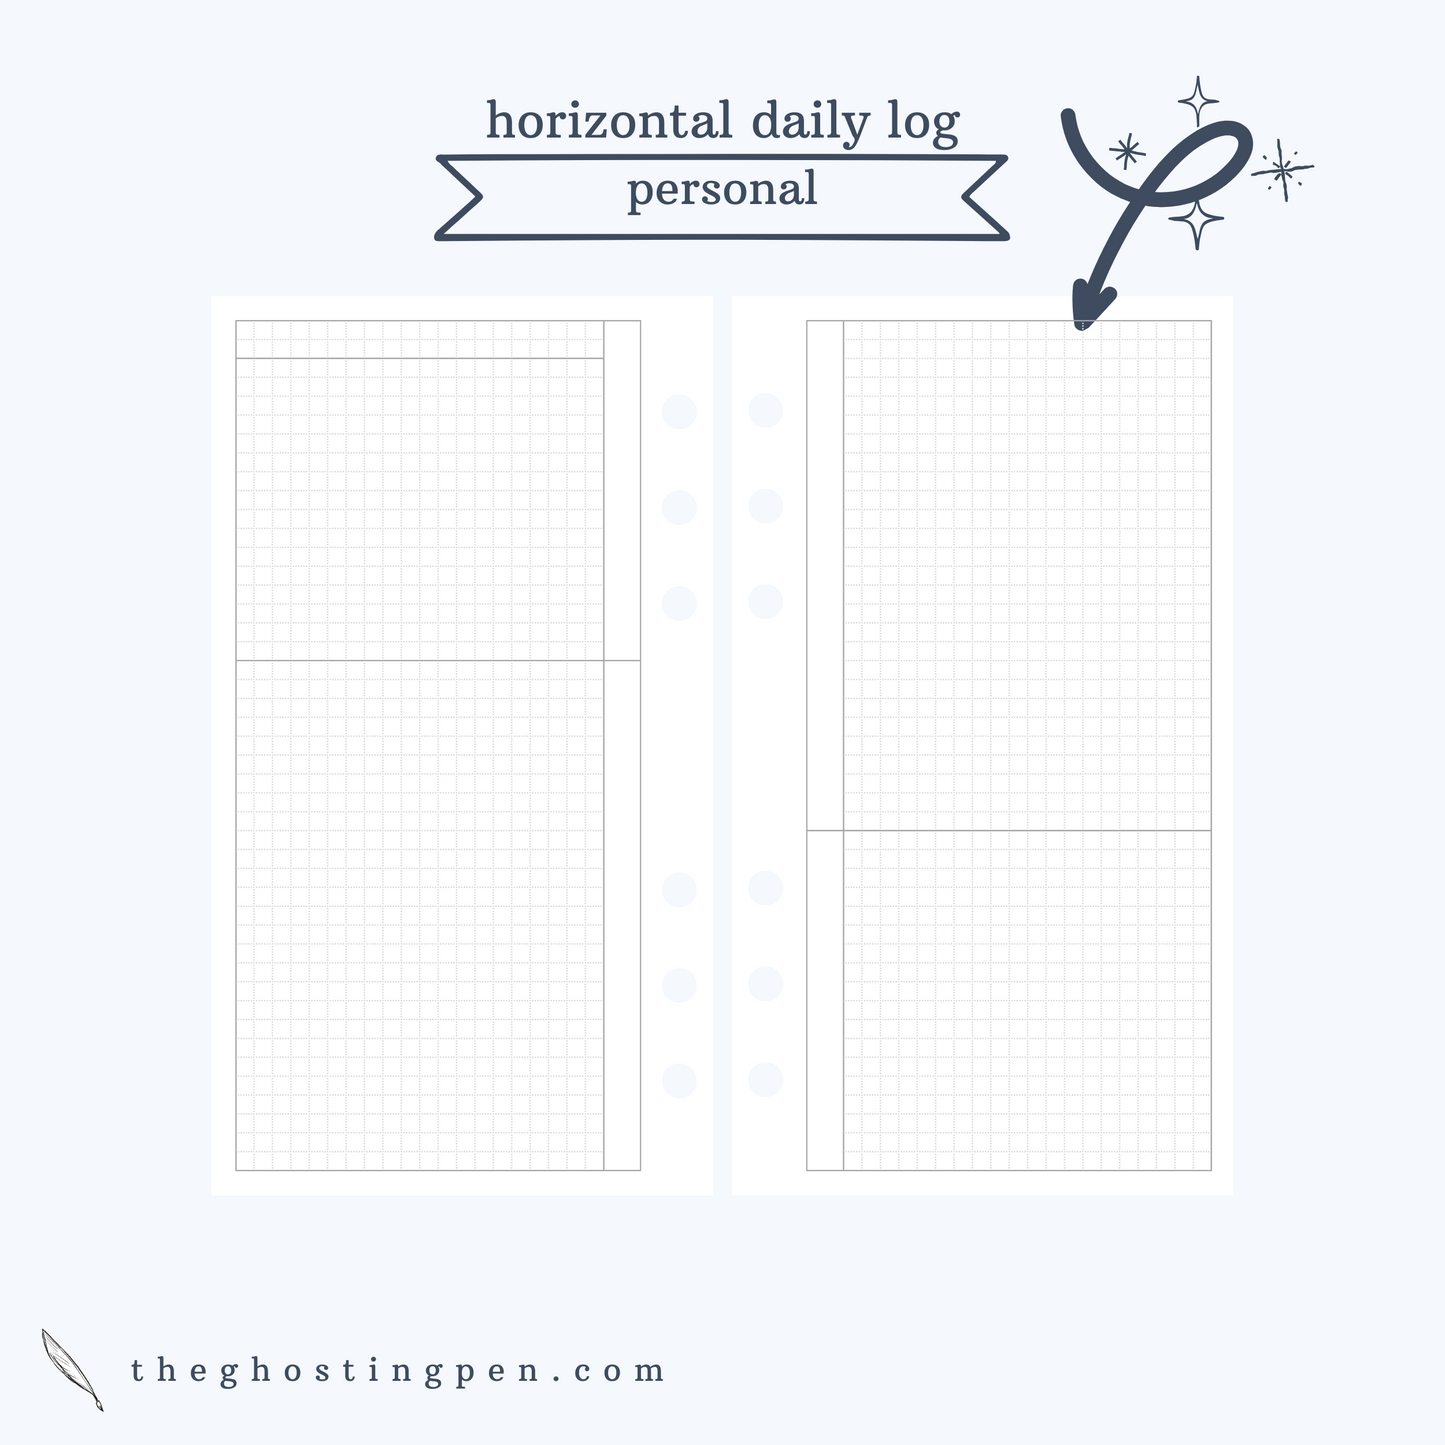 horizontal daily log